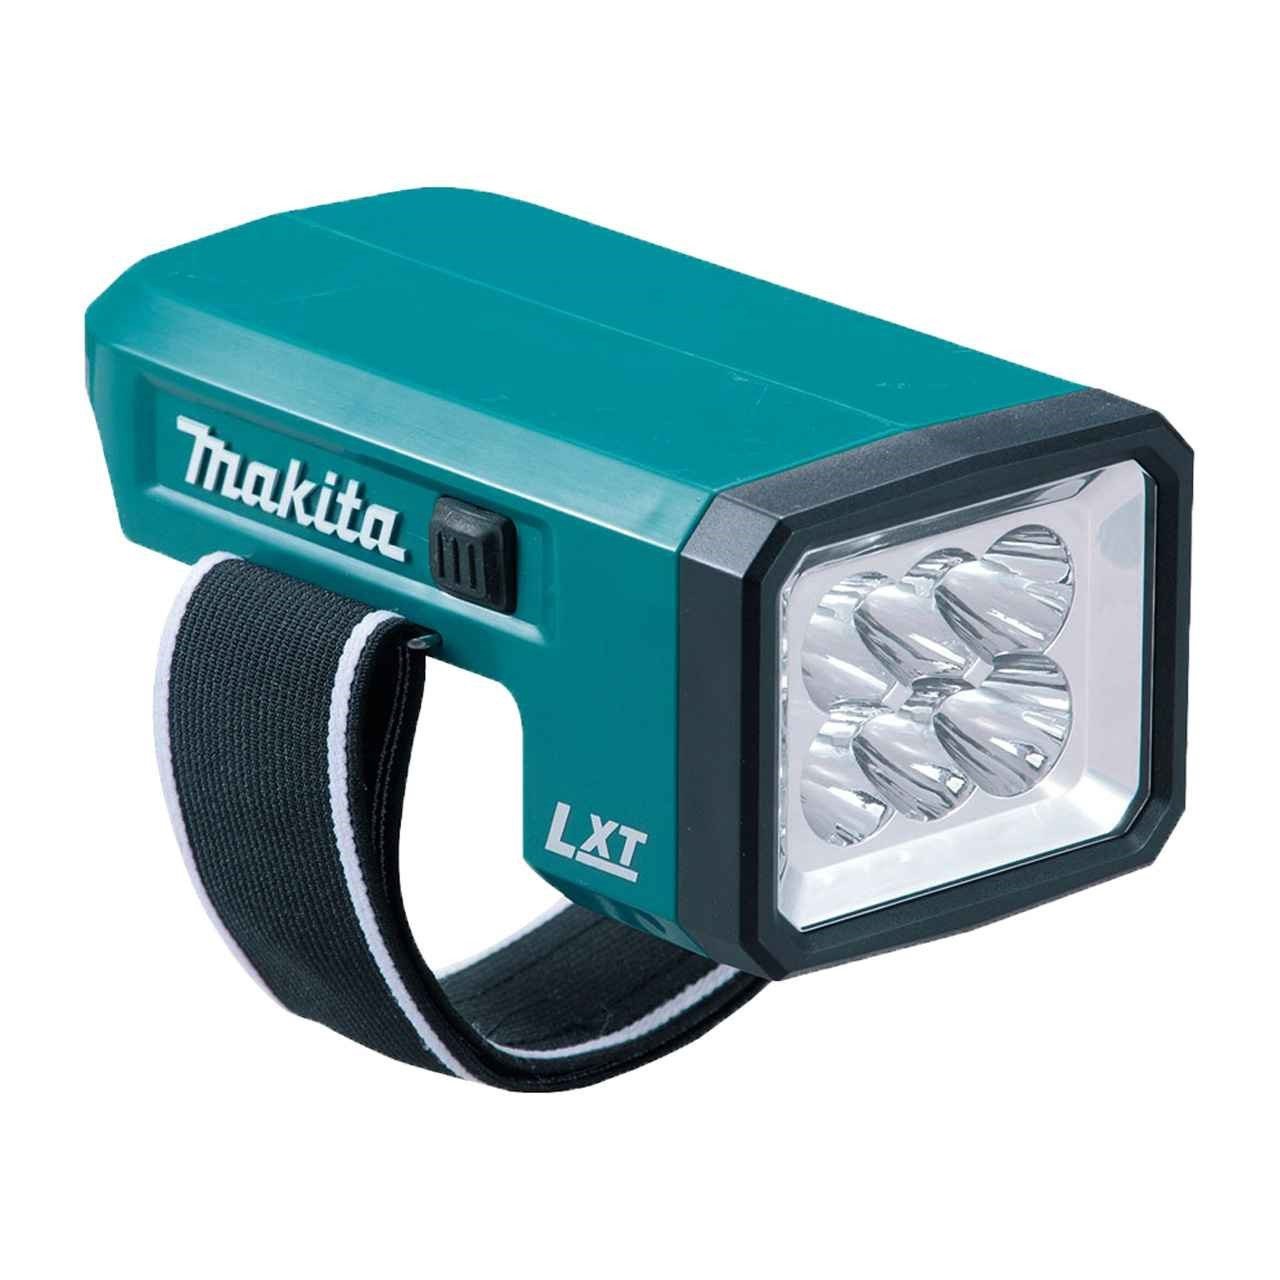 Makita DML186 18V LED锂离子手电筒(机身专用)